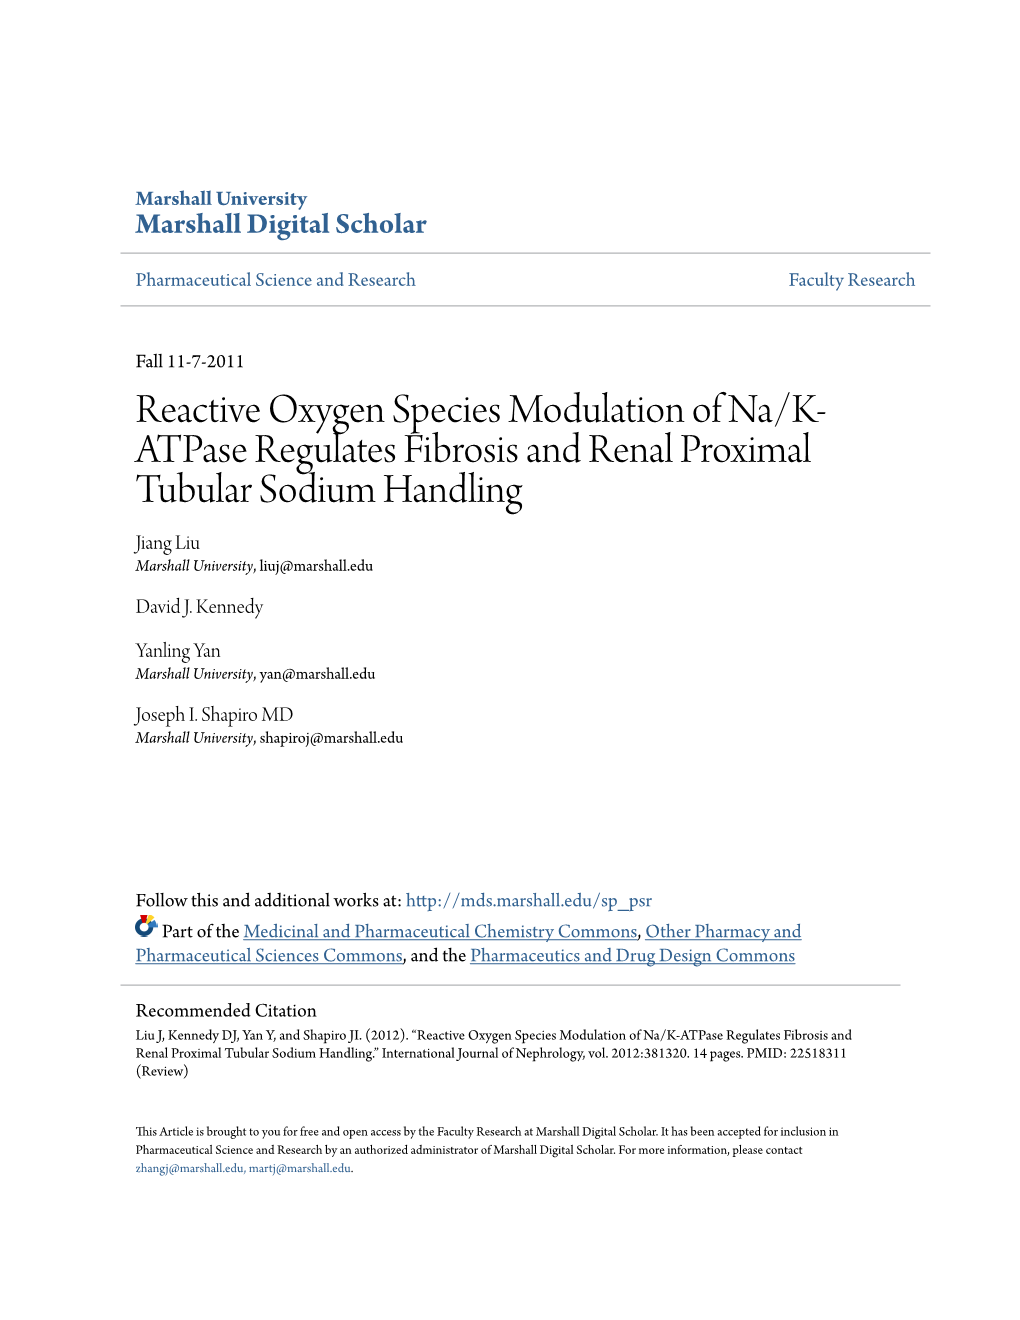 Reactive Oxygen Species Modulation of Na/K-Atpase Regulates Fibrosis and Renal Proximal Tubular Sodium Handling.” International Journal of Nephrology, Vol